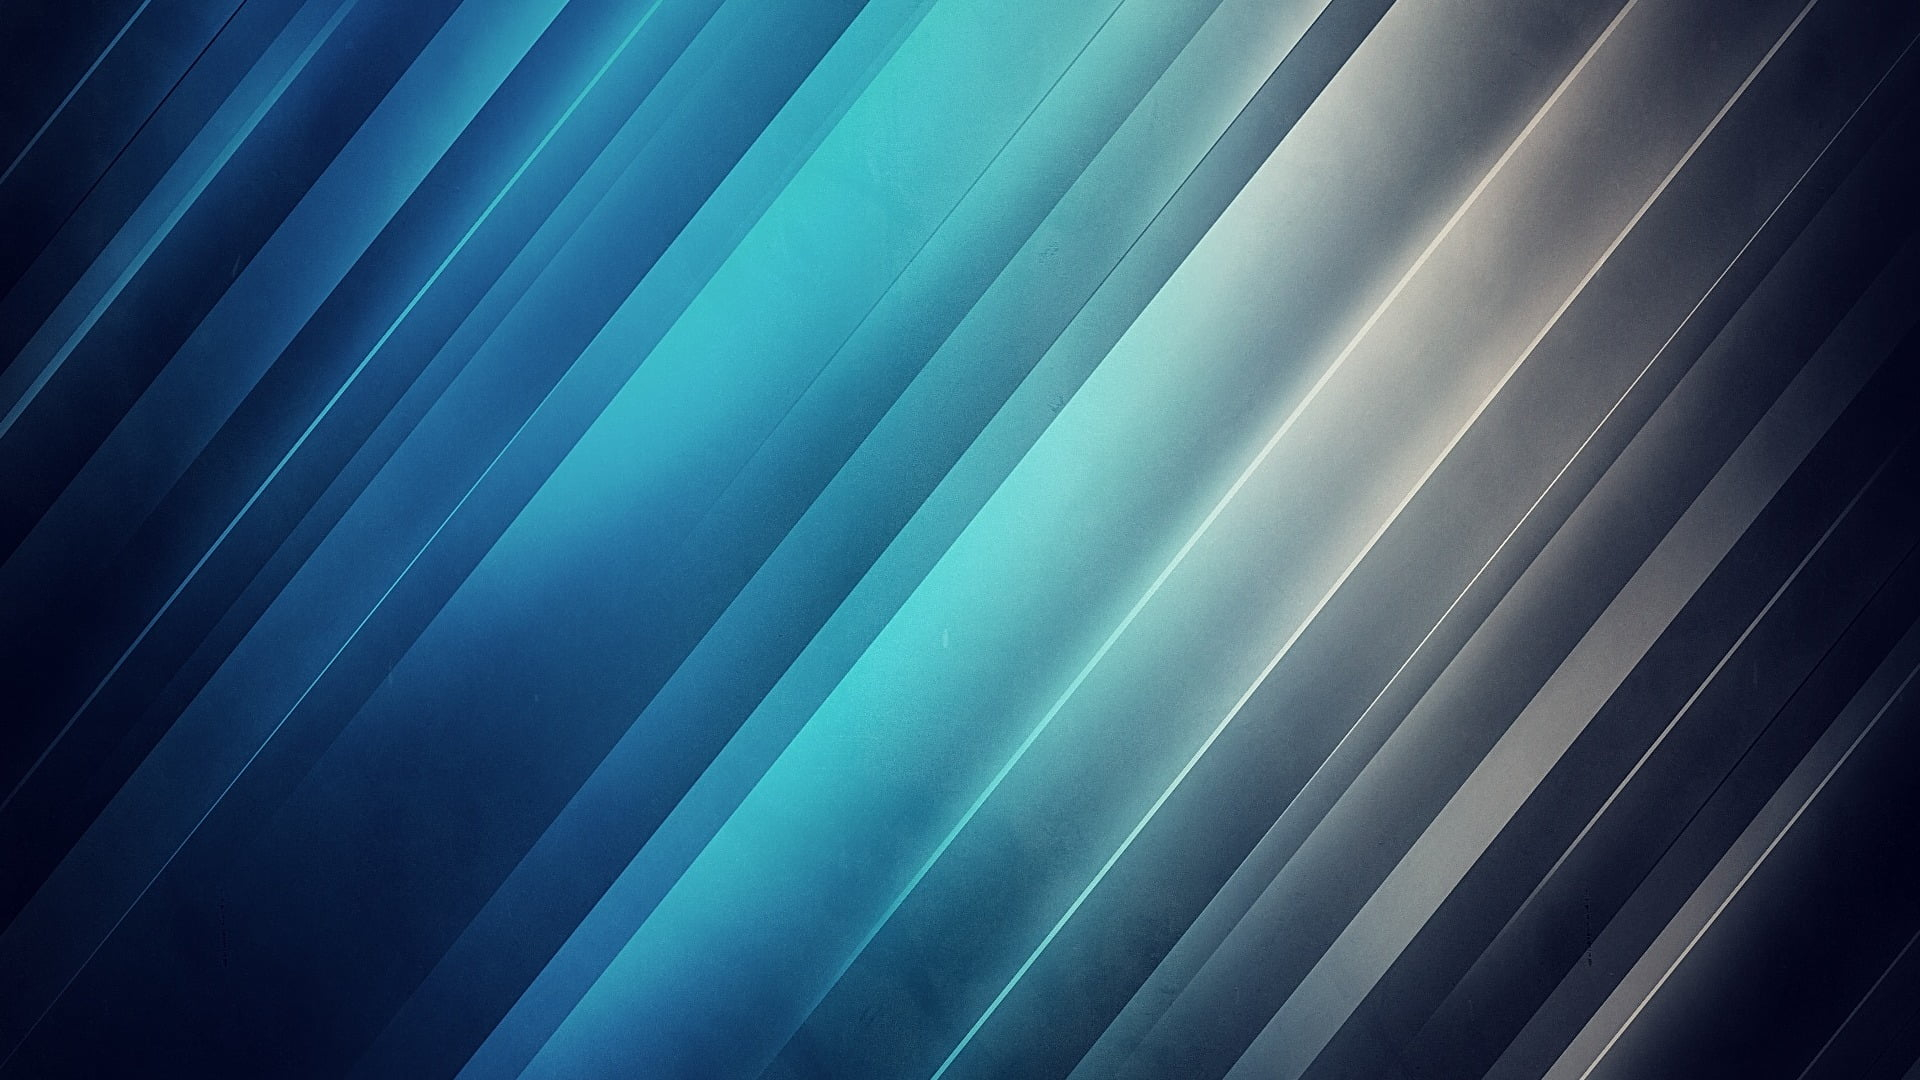 Blue and gray abstract digital wallpaper, lines, digital art